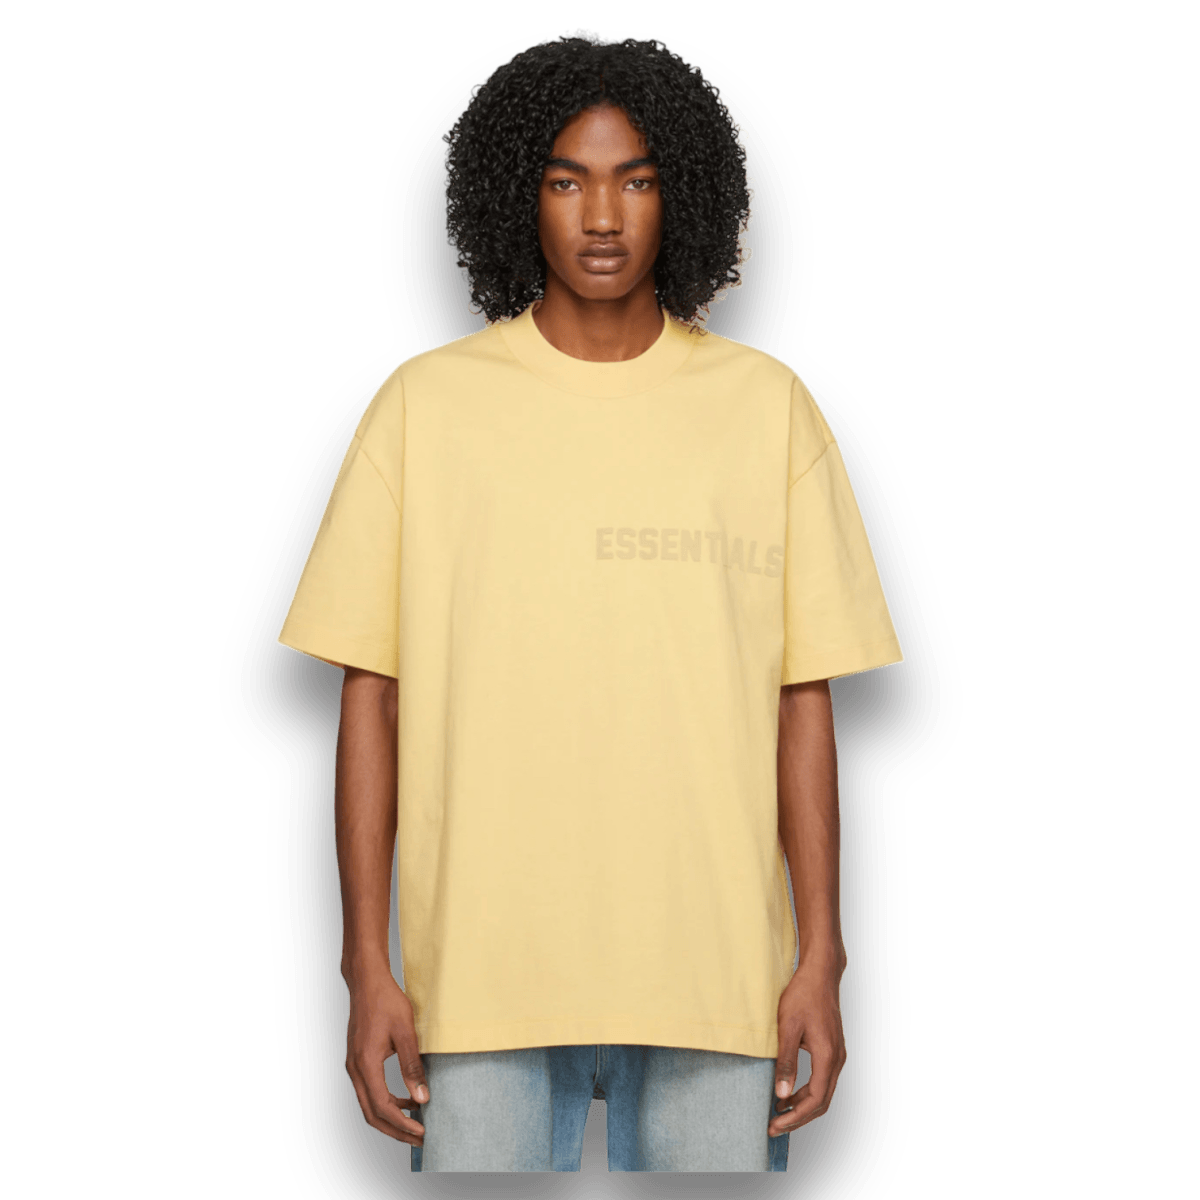 Essentials Short Sleeve Cotton T-Shirt Yellow - T-Shirt - Jawns on Fire Sneakers & Streetwear